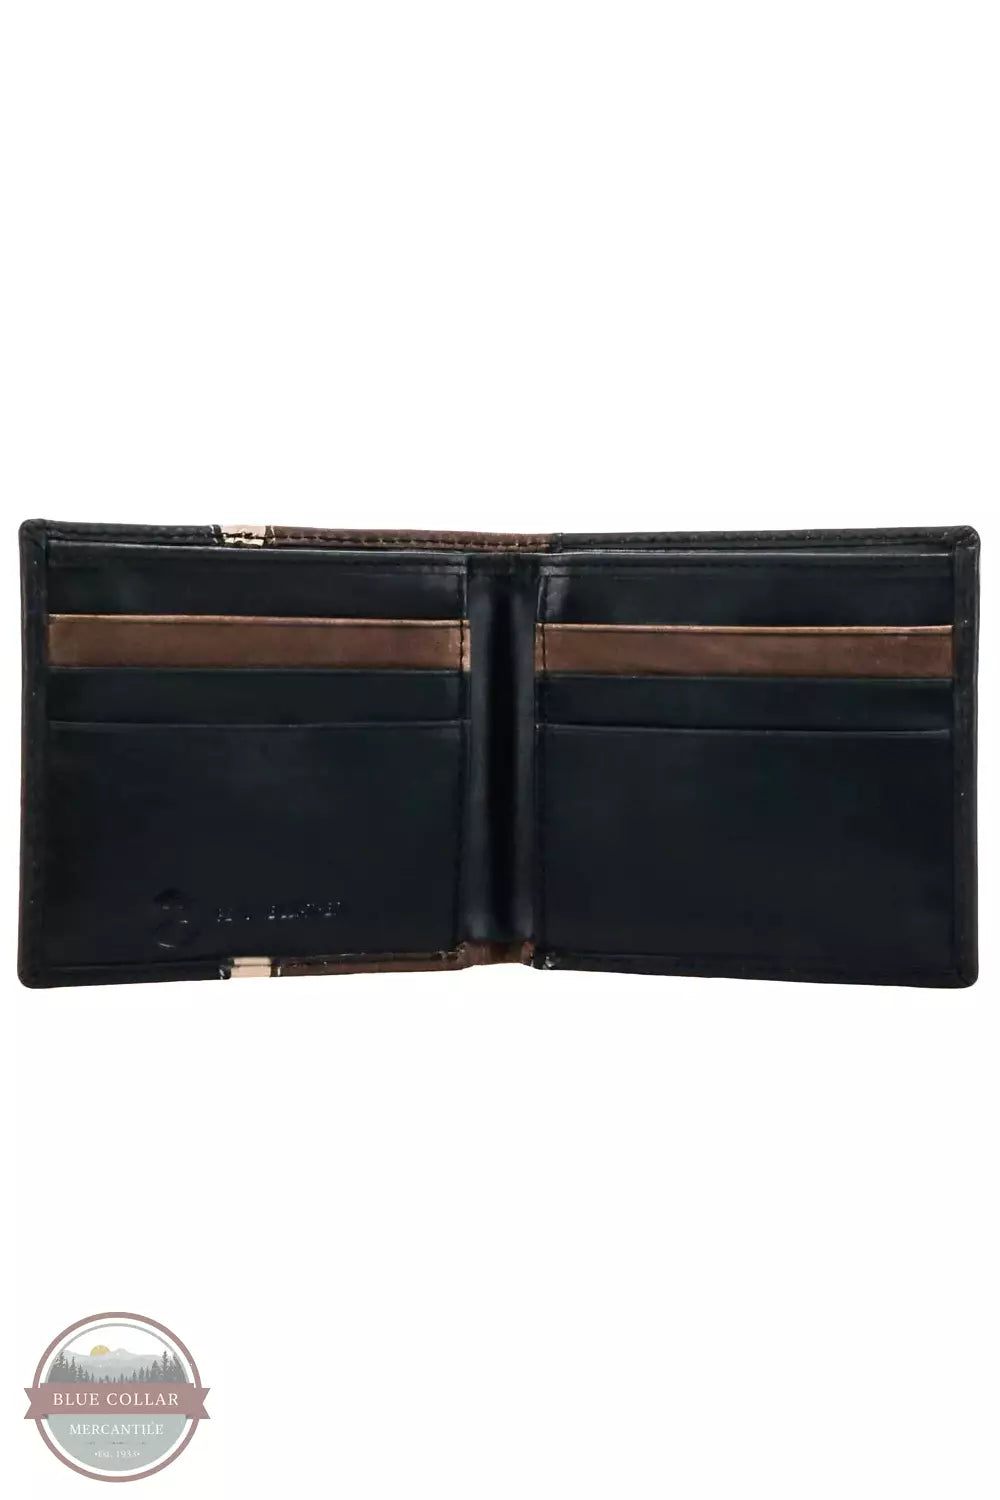 Hooey HBF006-BRBK Tonkawa Aztec Overlay Bi-Fold Wallet in Brown/Black/Ivory Inside View